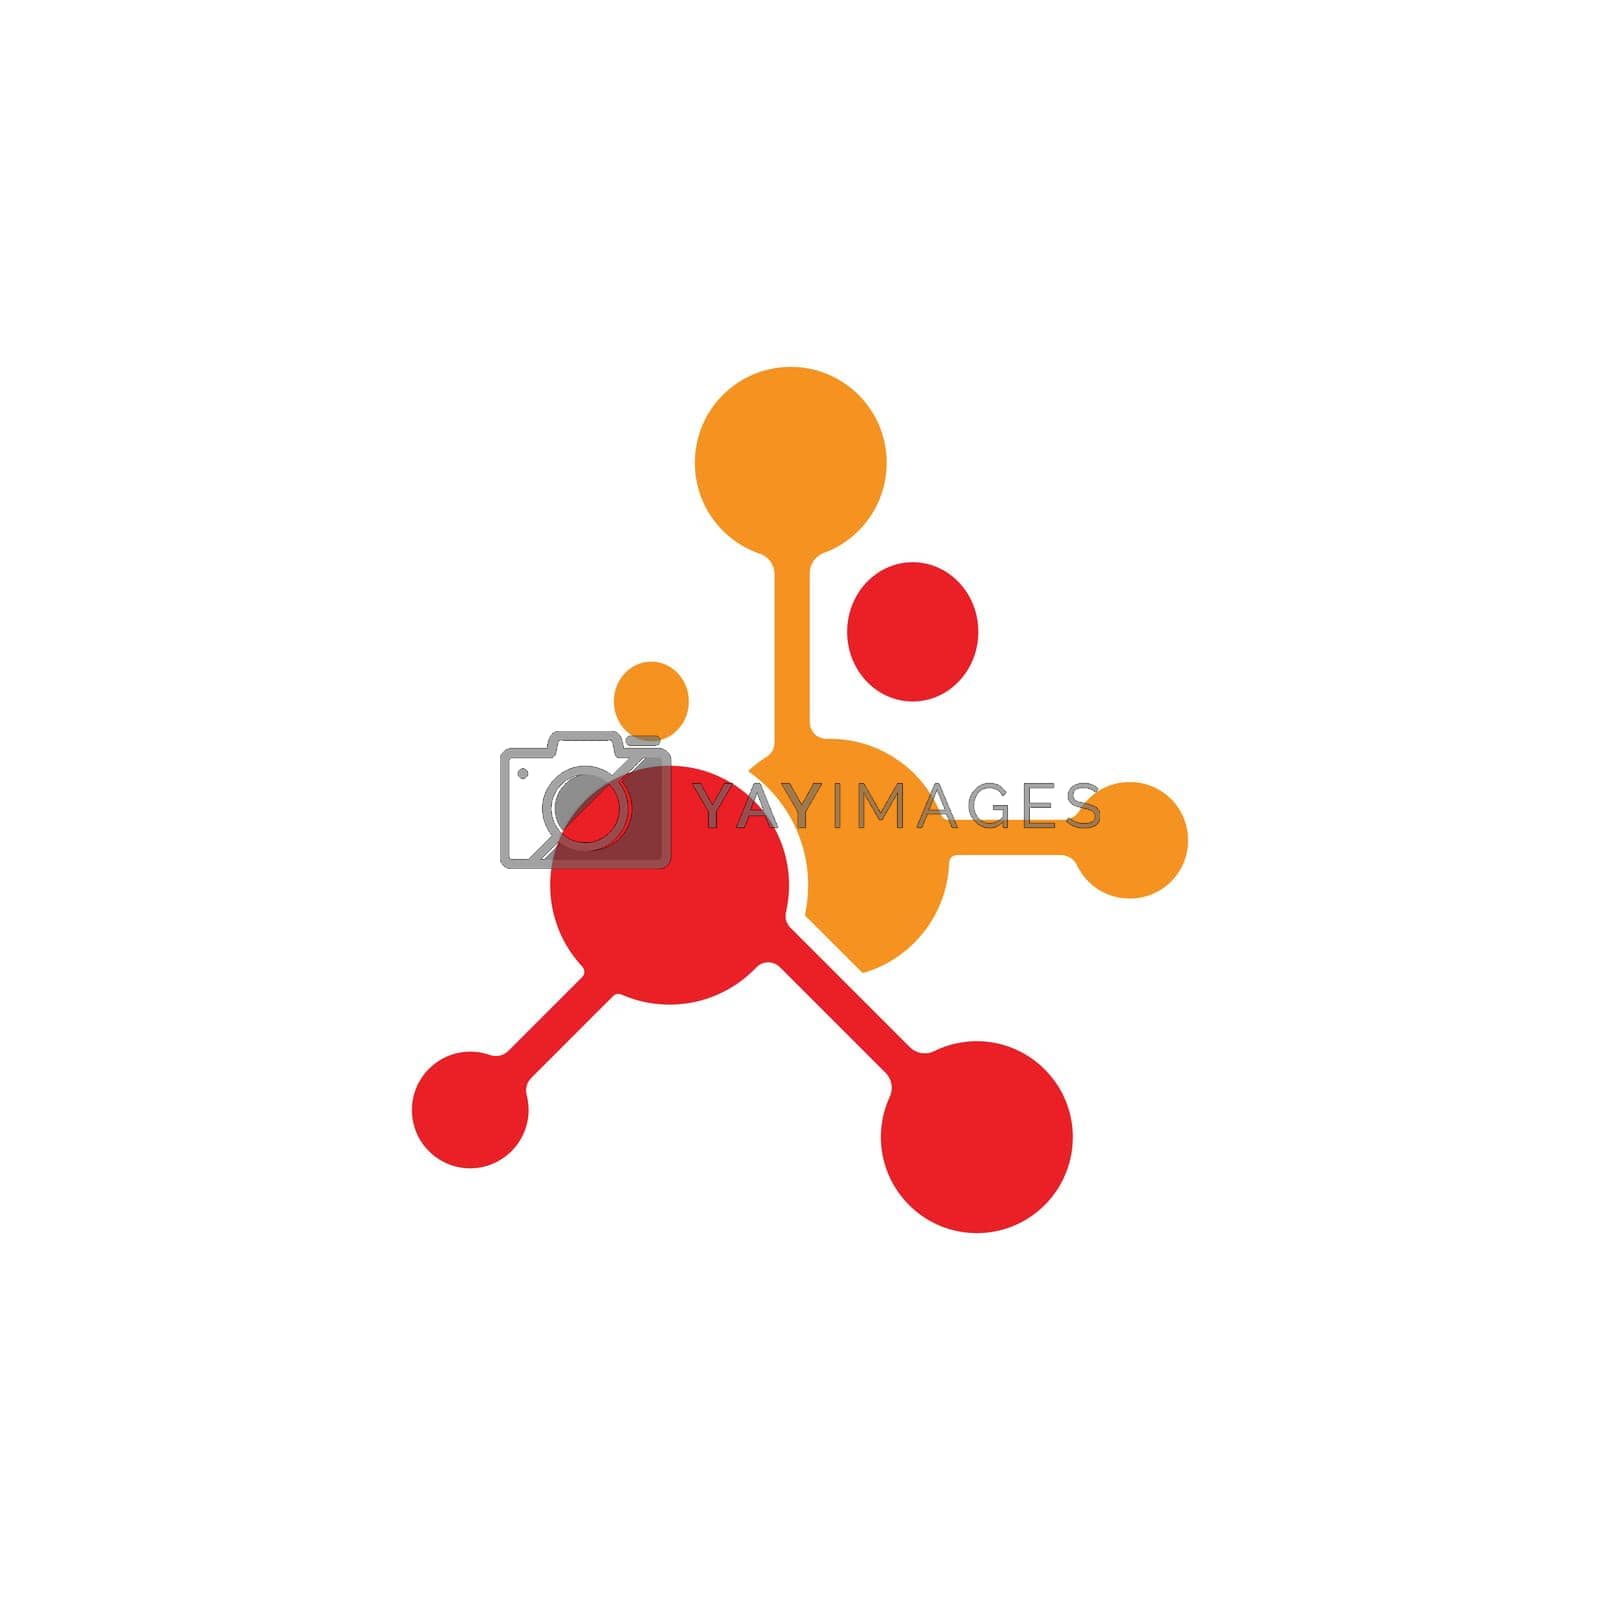 Royalty free image of molecule logo vector by awk